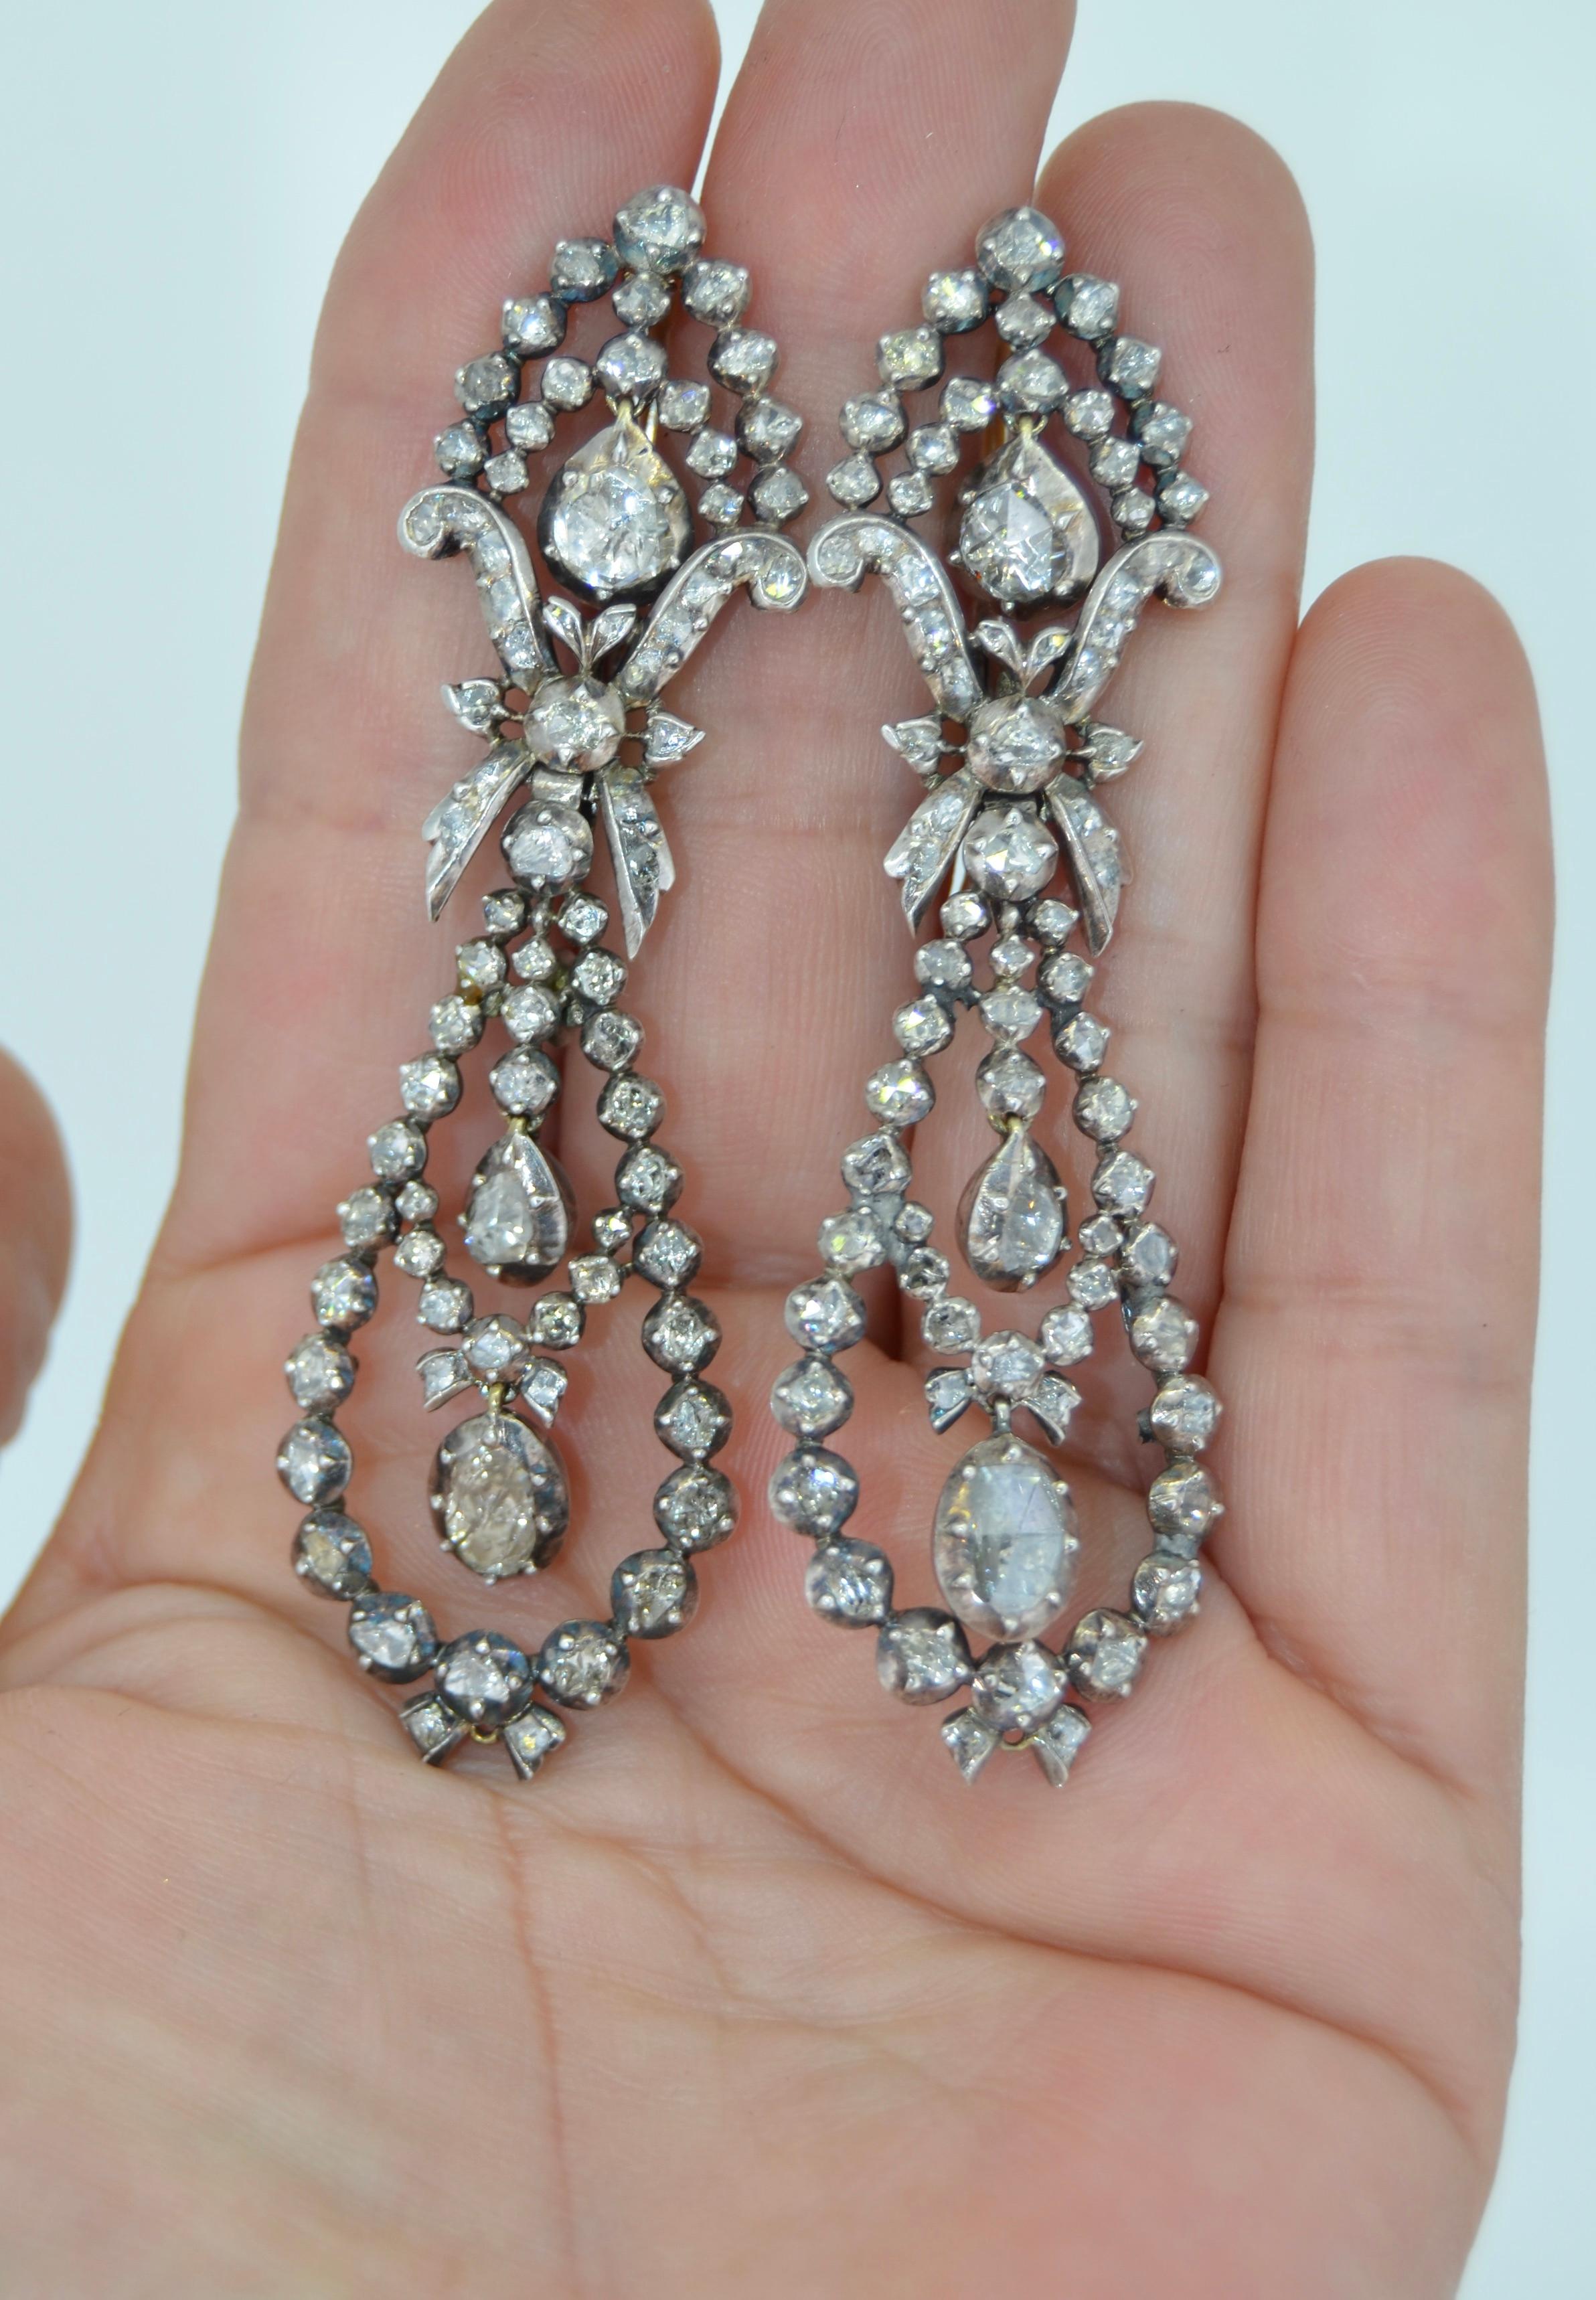 Georgian Era Rose Cut Diamond Pendant Earrings in Silver & 14k In Good Condition For Sale In Saratoga, CA